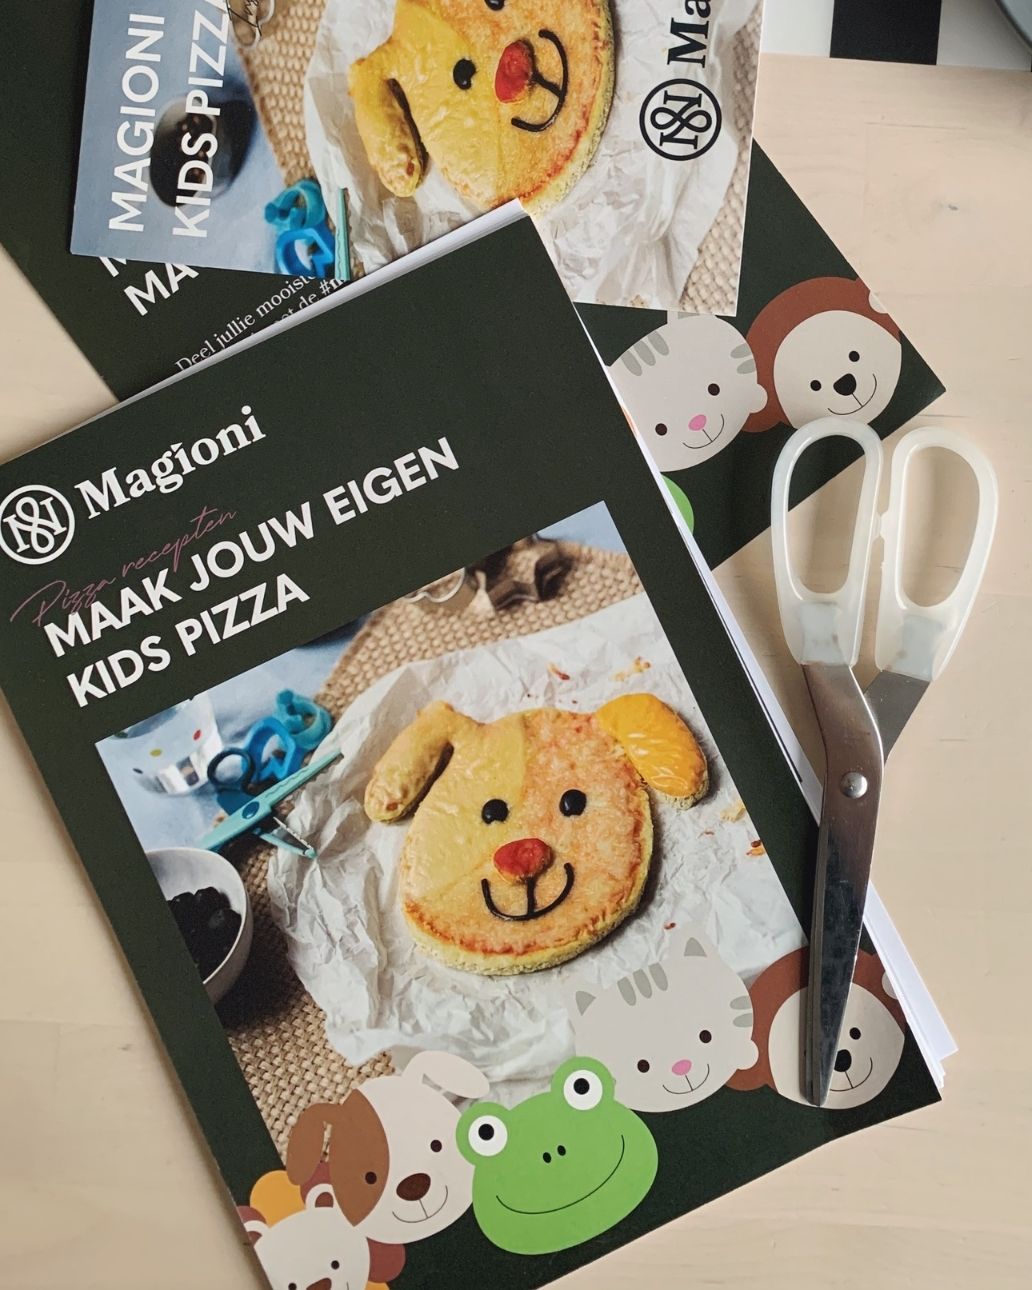 magioni kids pizza beleggen mamalifestyle.nl (1)